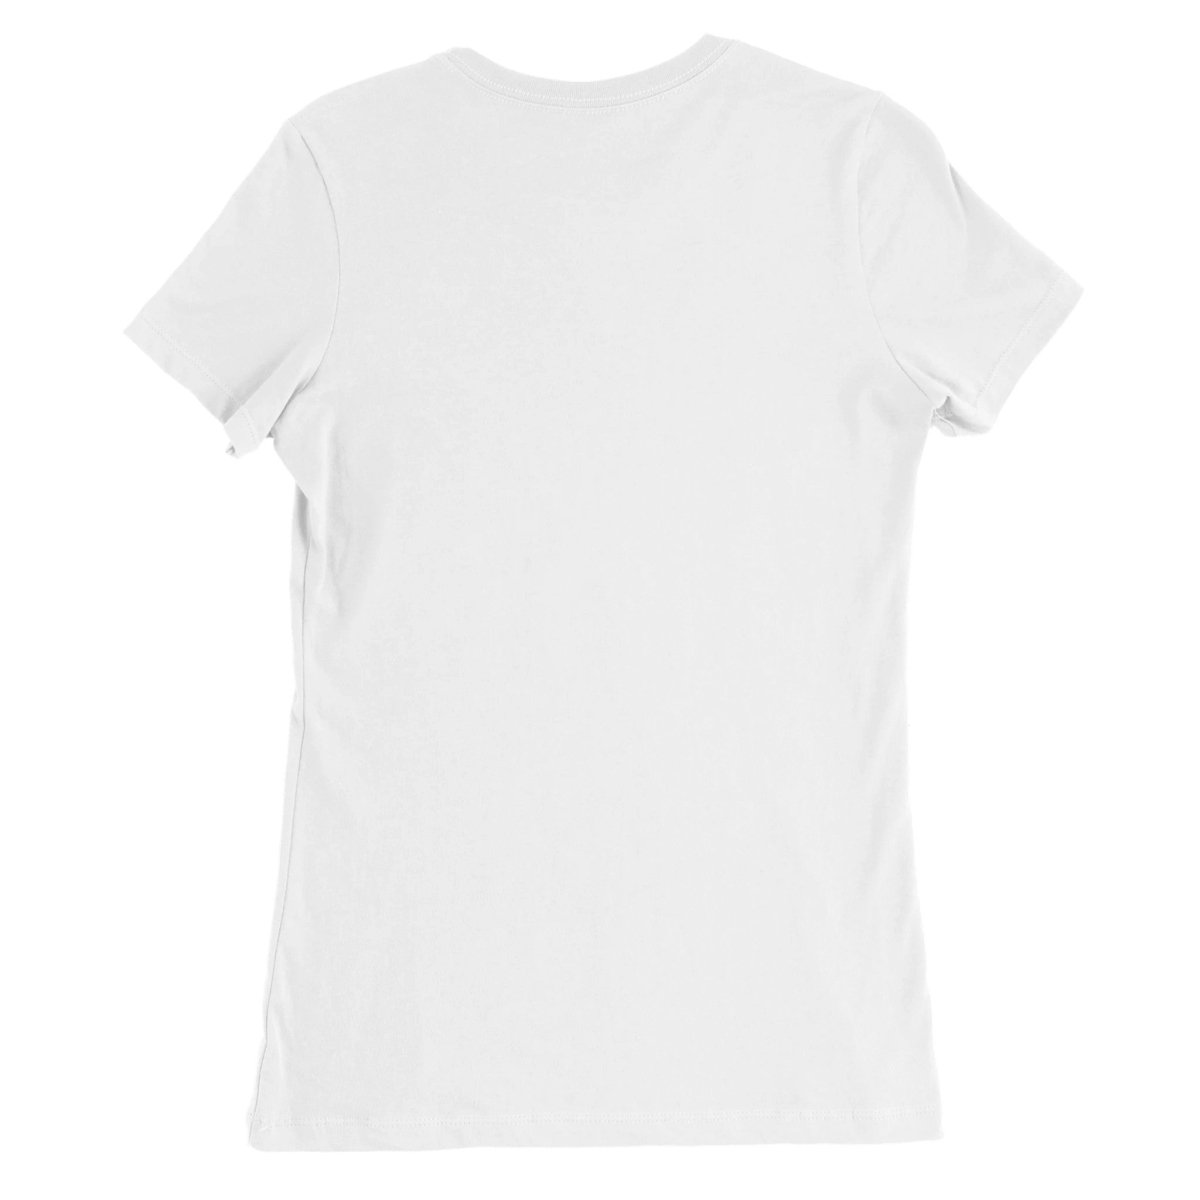 Premium 'Uke Love' Women's Crewneck T-shirt - Uke Tastic - S - Free Delivery - Uke Tastic